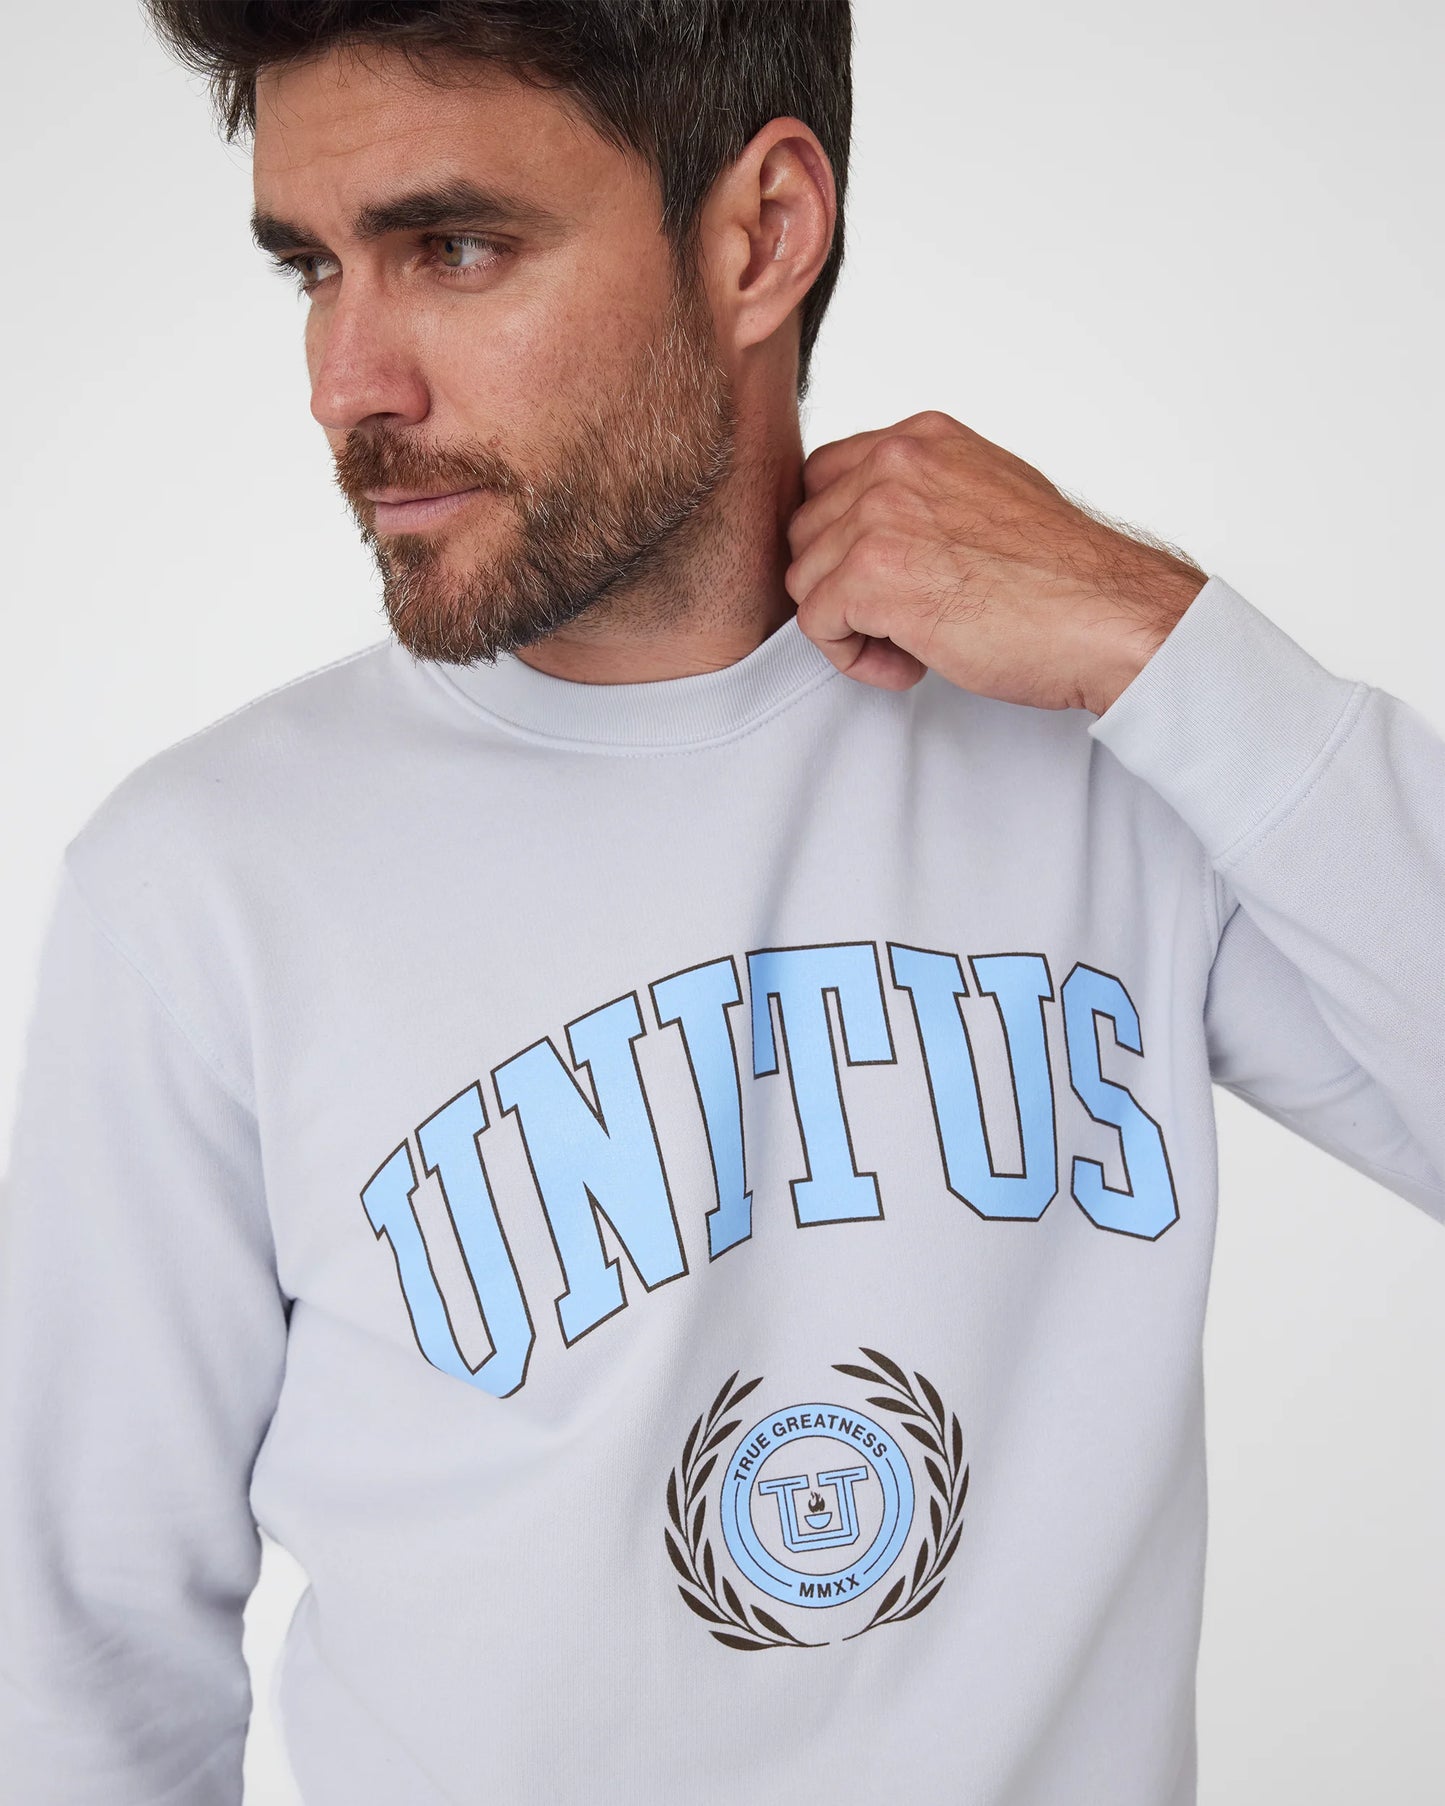 UNITUS Crest Crew Fleece